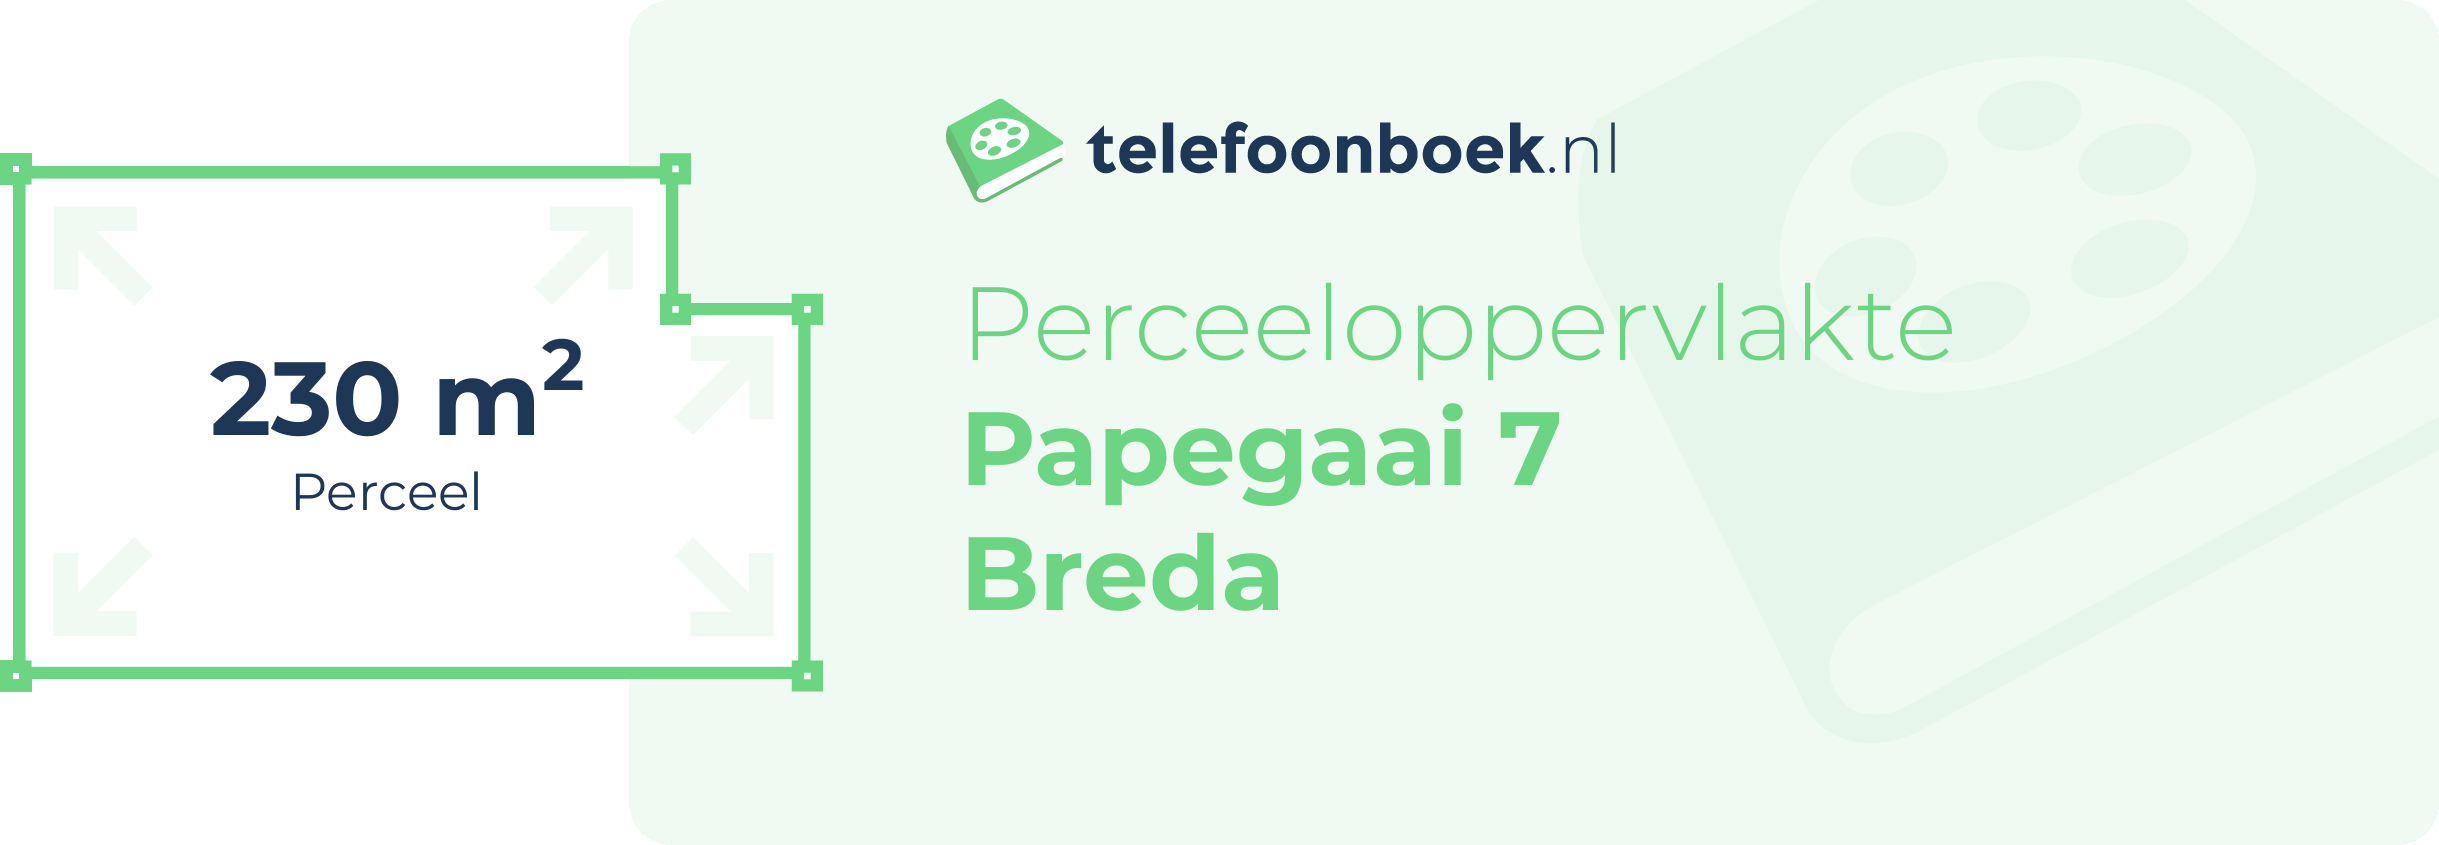 Perceeloppervlakte Papegaai 7 Breda